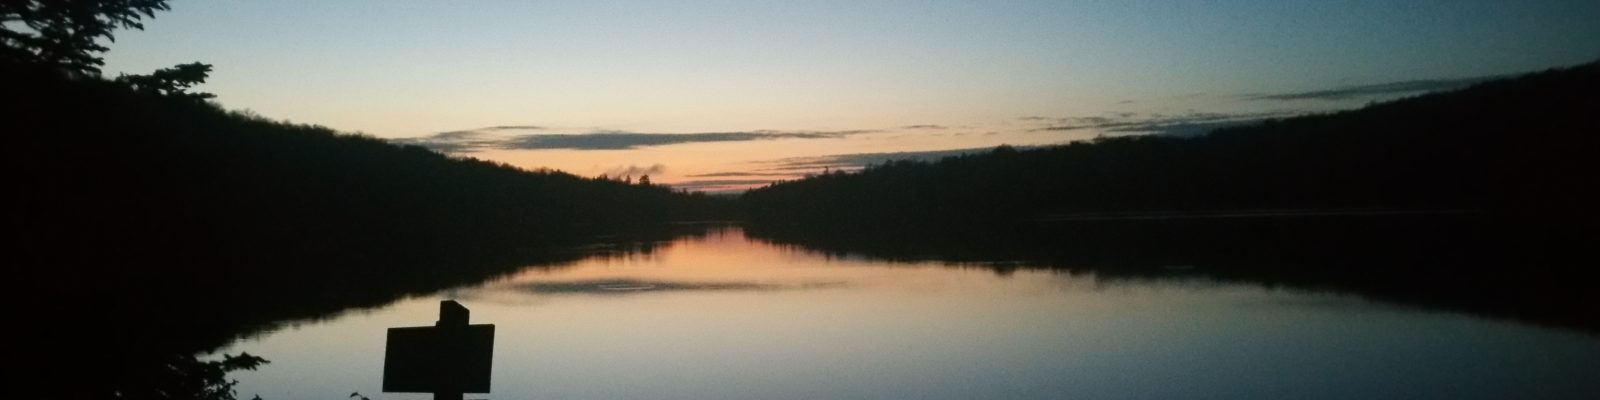 Stratton Pond at sunset